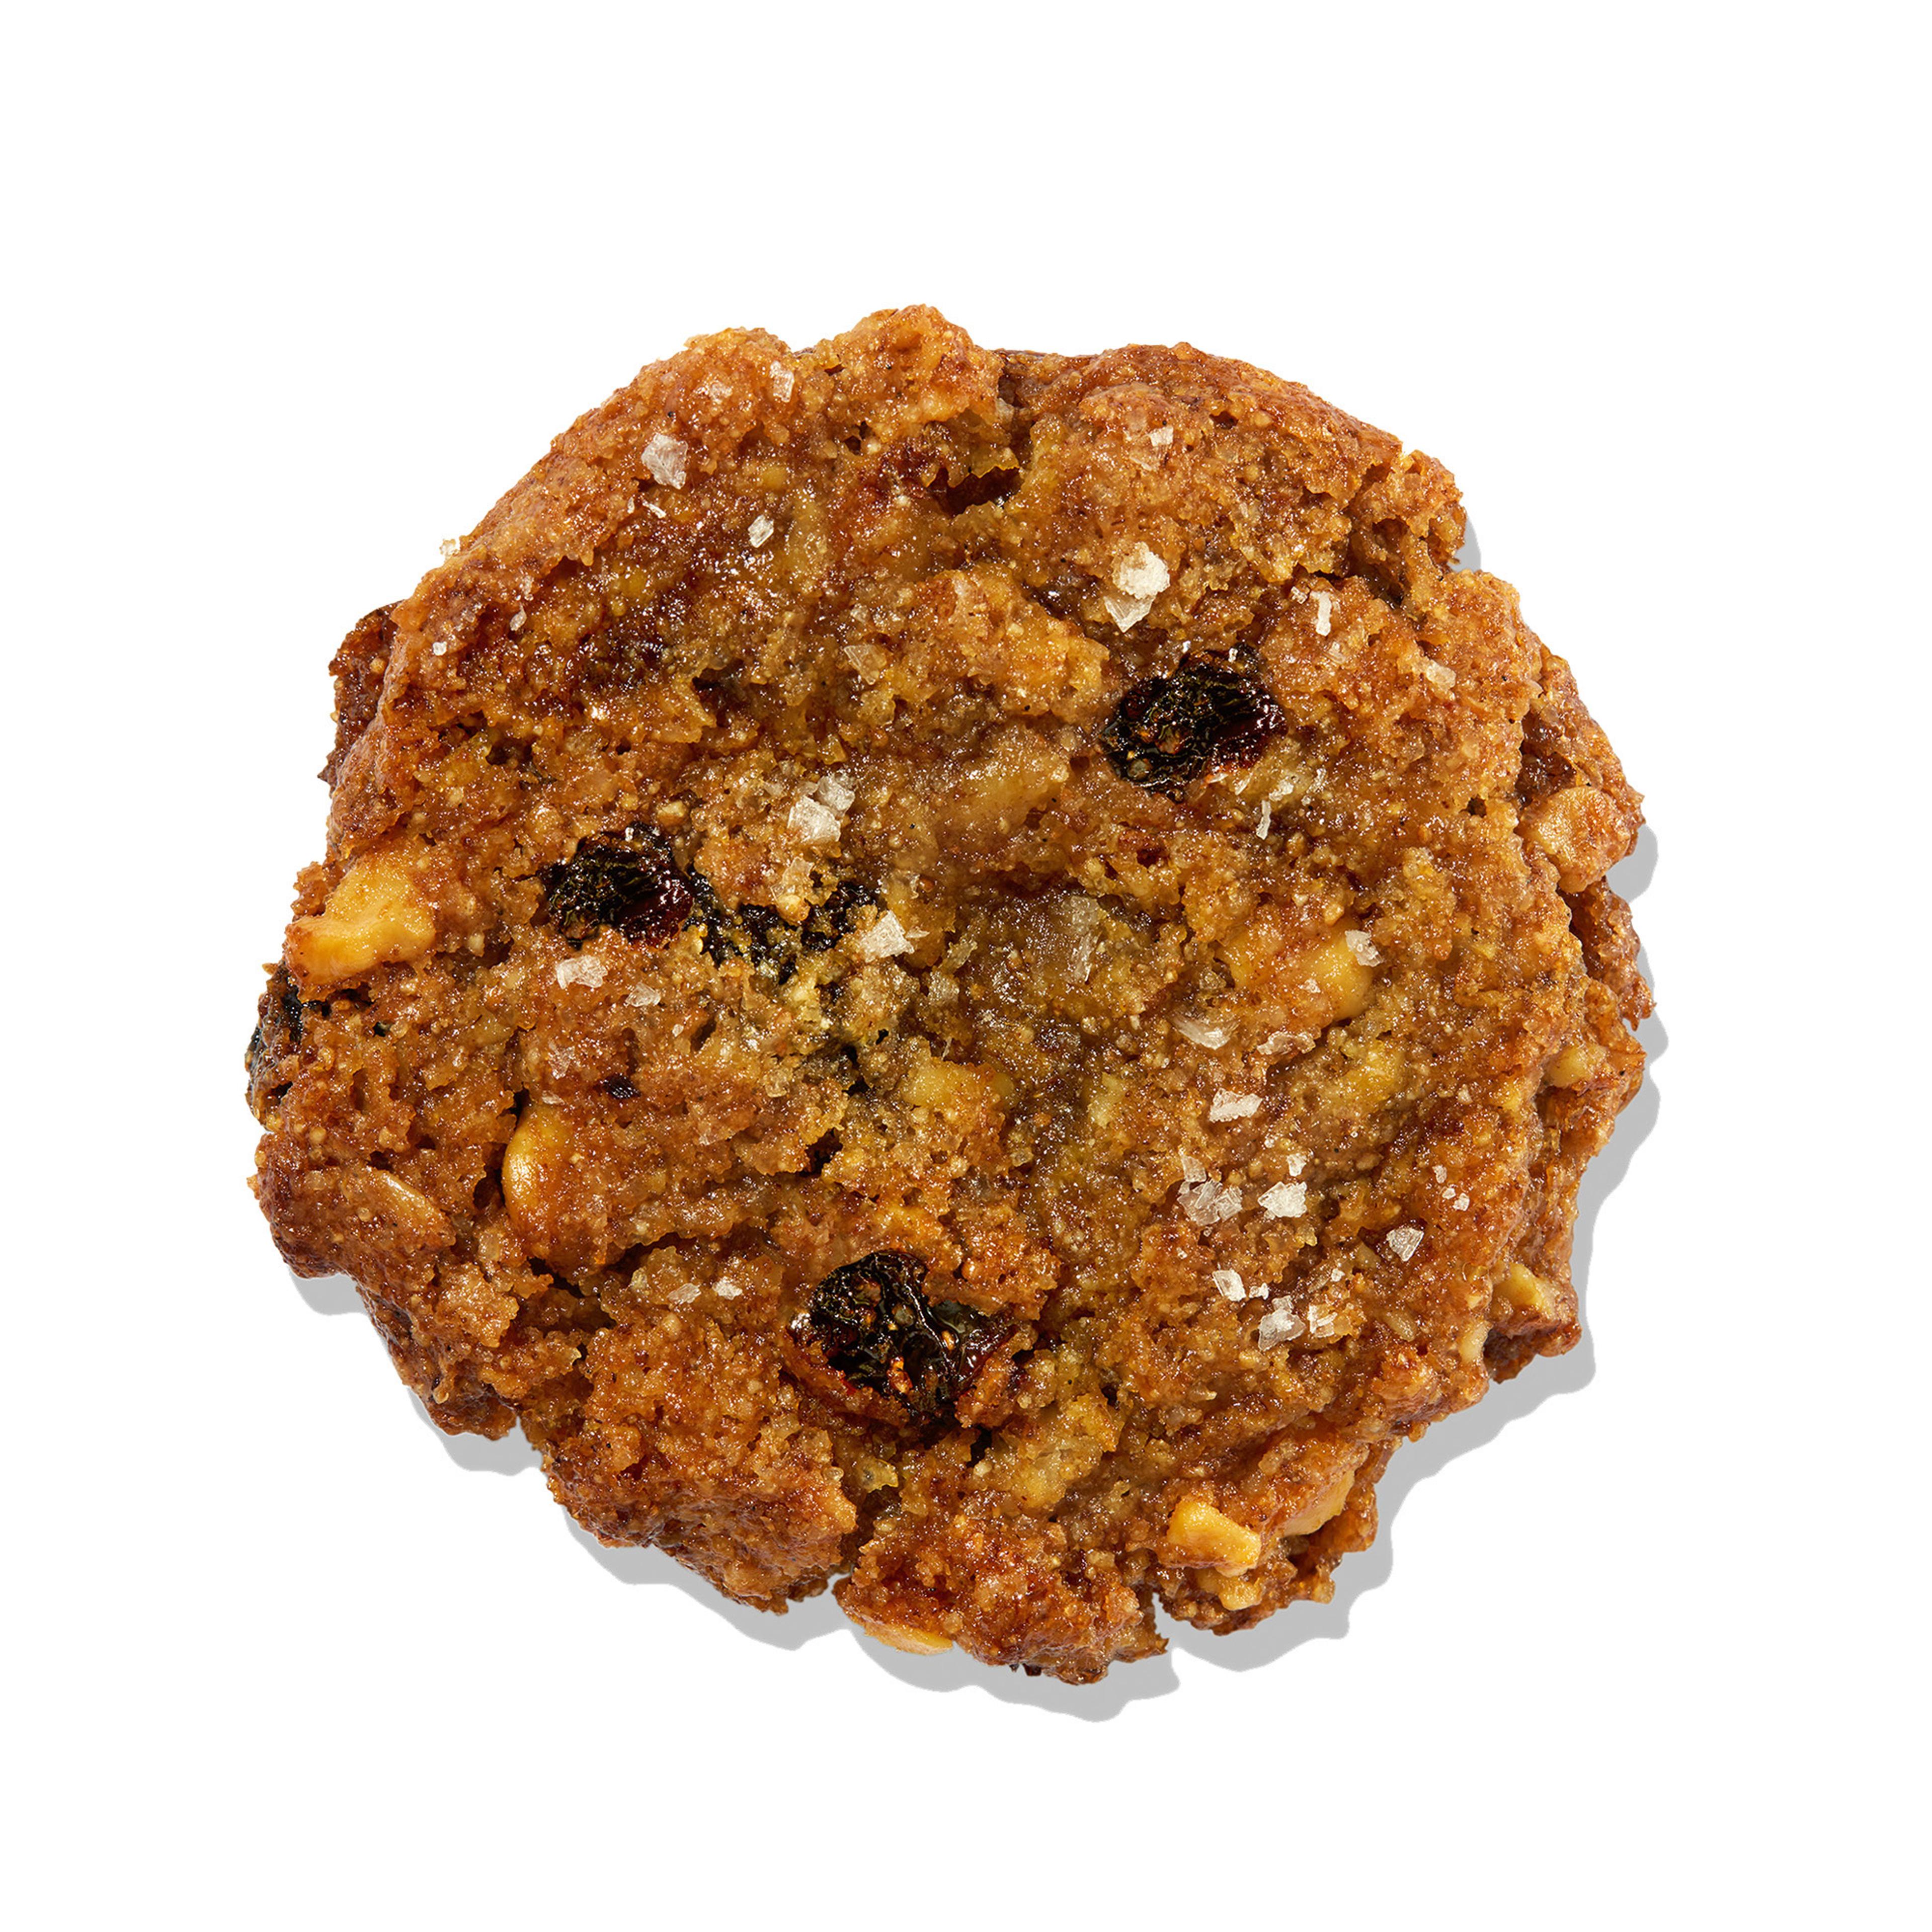 Oatmeal Raisin Walnut Cookie